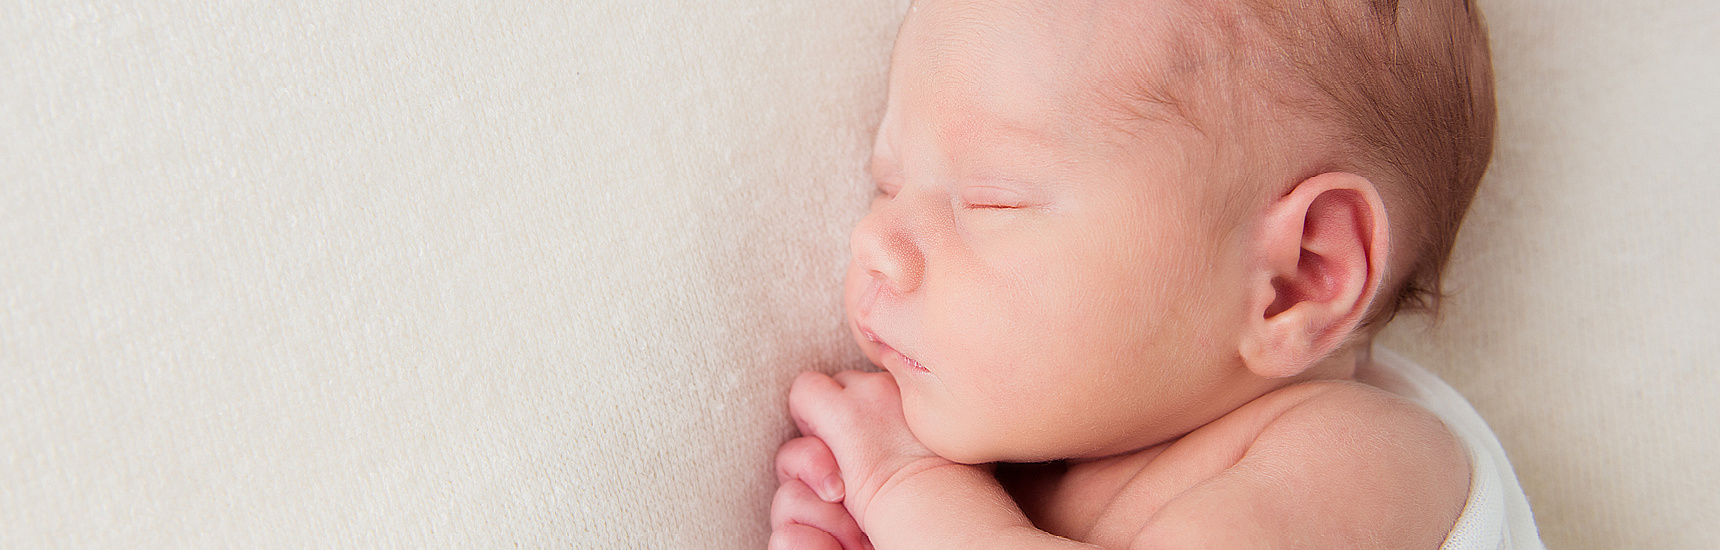 Hilfe für Neugeborene in Not / Foto:Irene Geo/AdobeStock.com